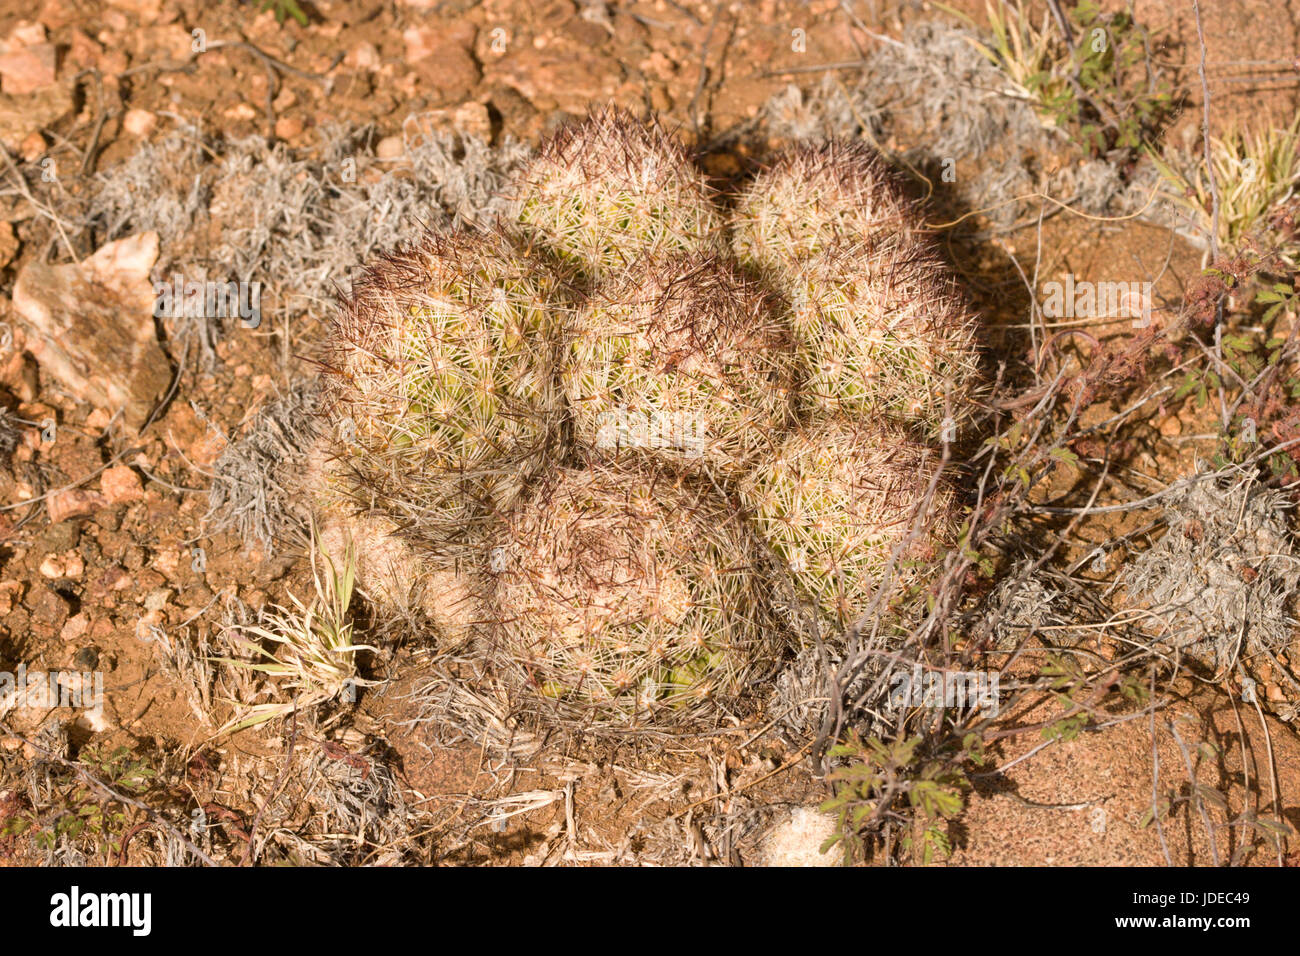 Bienenstock Cactus Escobaria vivipara Cactaceae auch bekannt als Vivipara Coryphantha geführt. Stockfoto